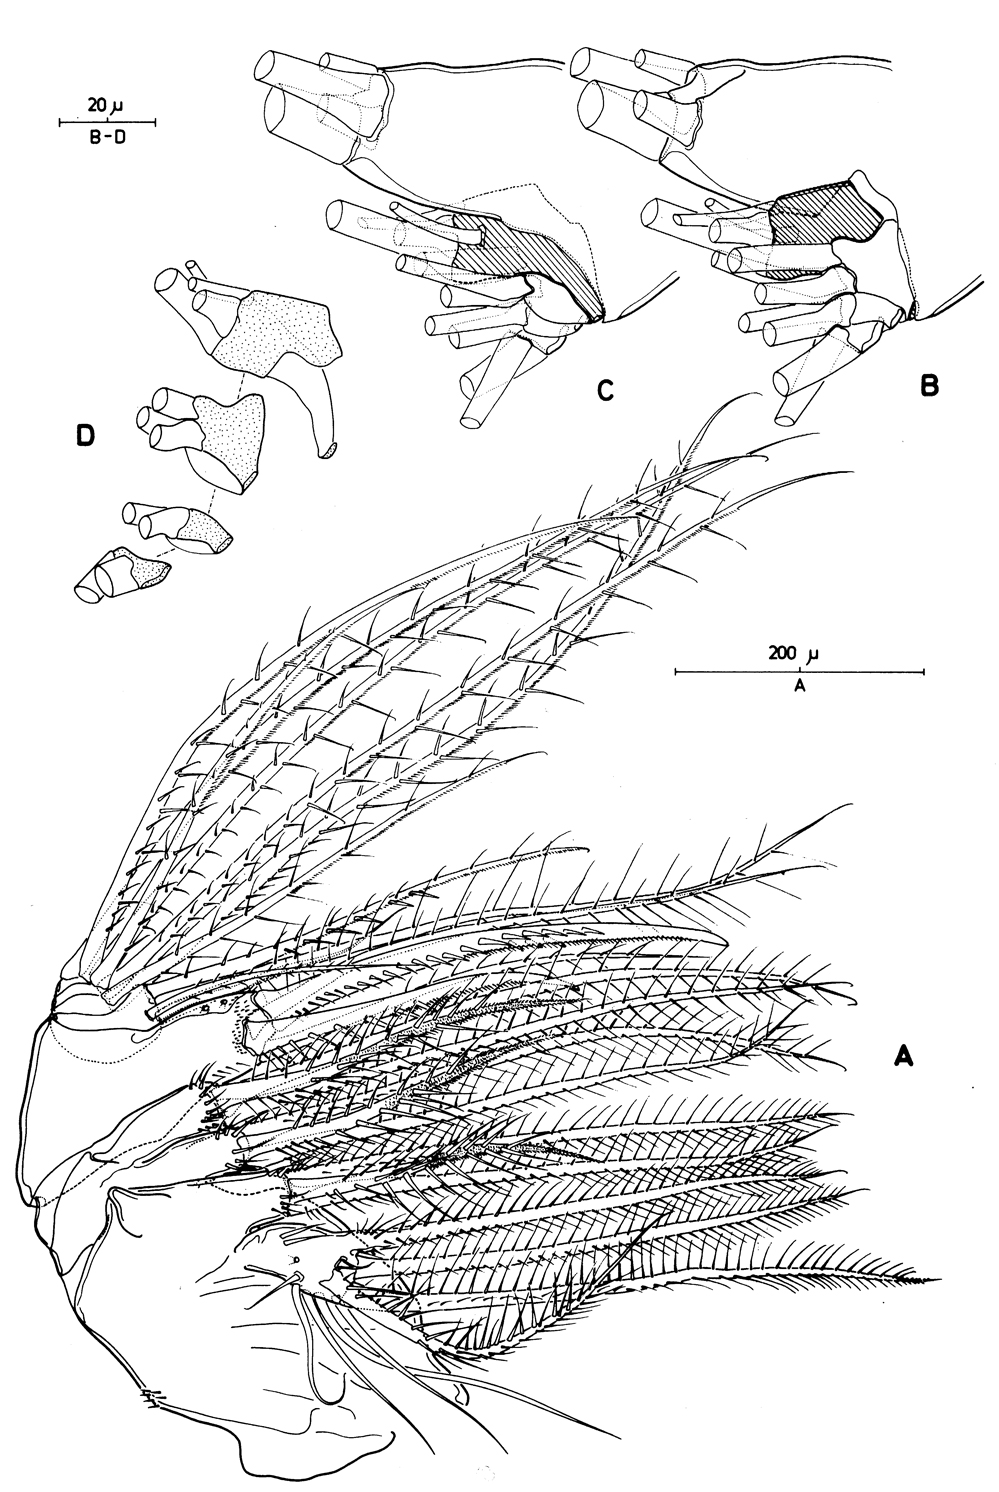 Species Pleuromamma xiphias - Plate 37 of morphological figures